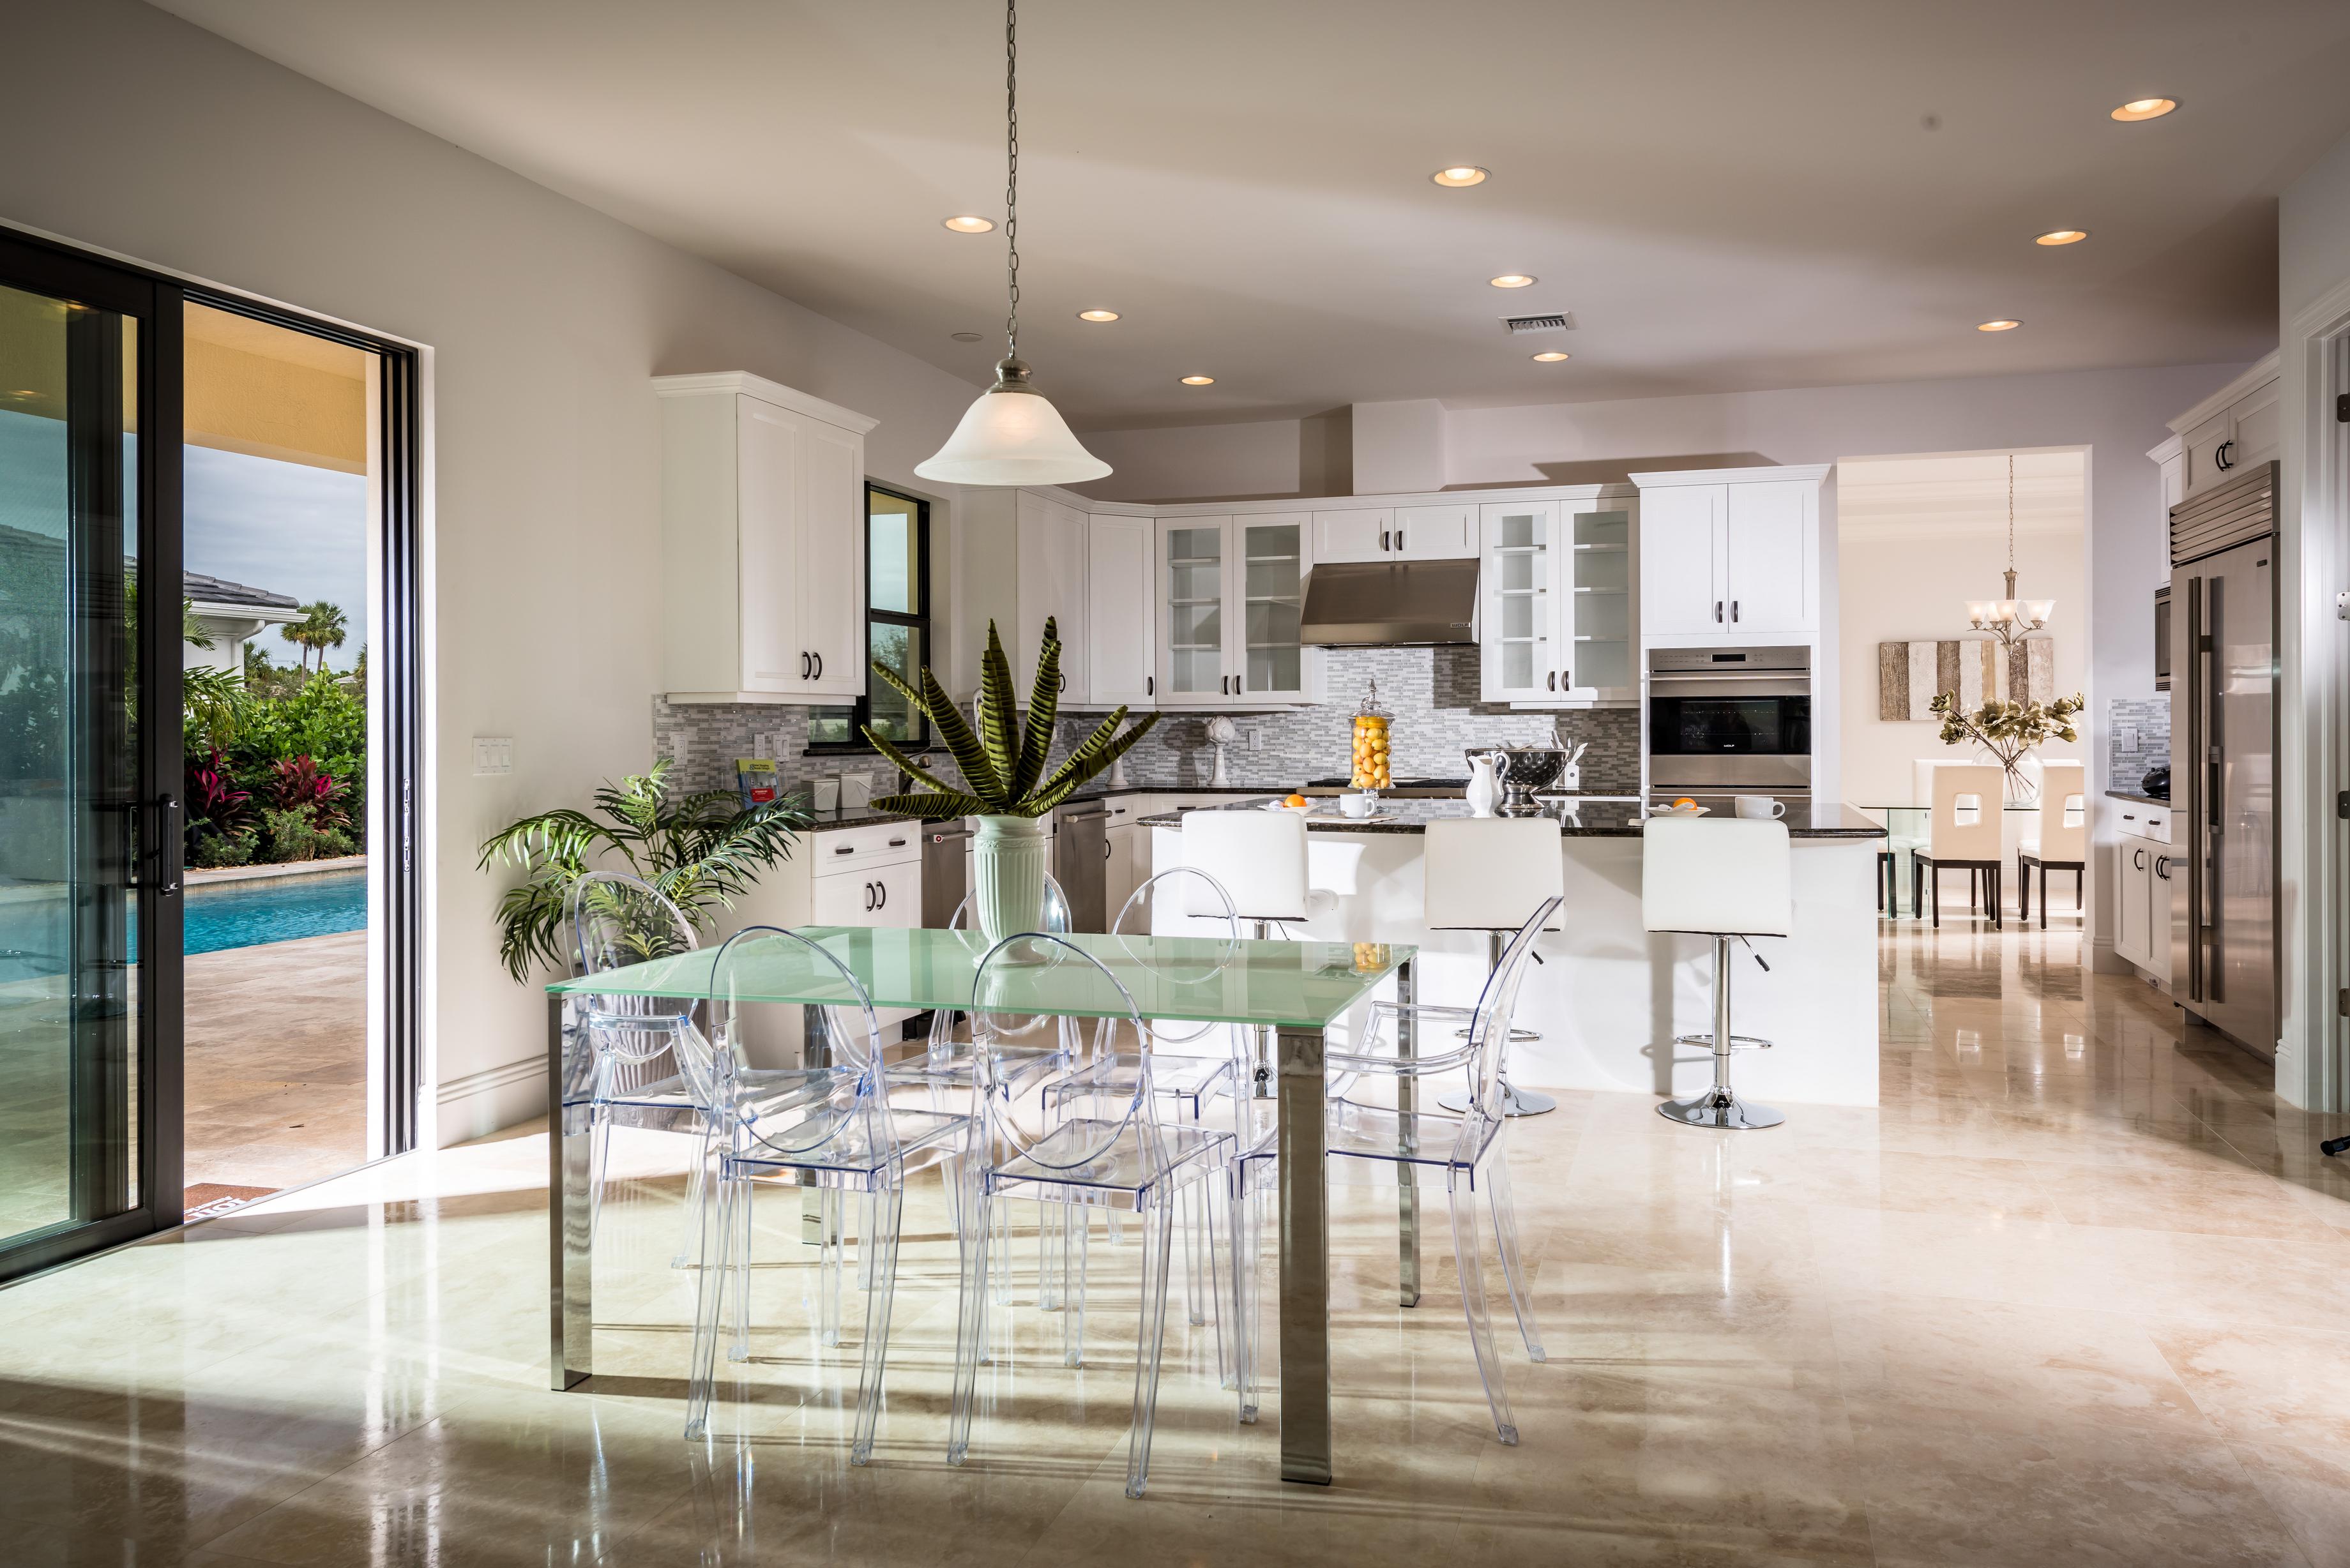 Elegant kitchen featuring glass elements.